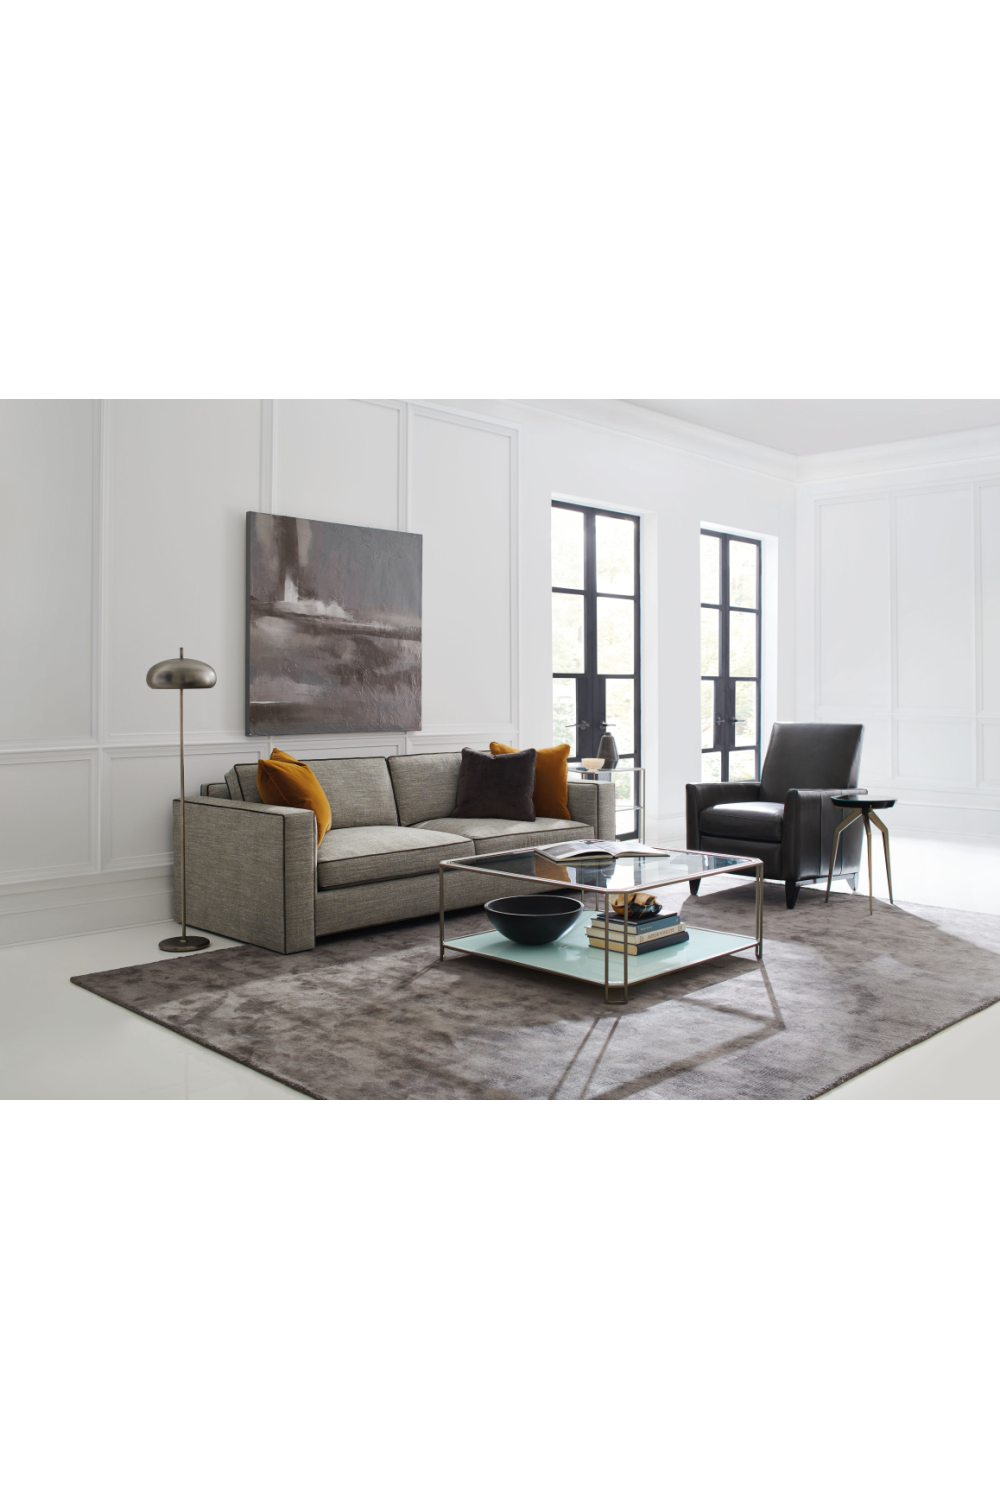 Piped Modern Sofa | Caracole Welt Played | Oroa.com